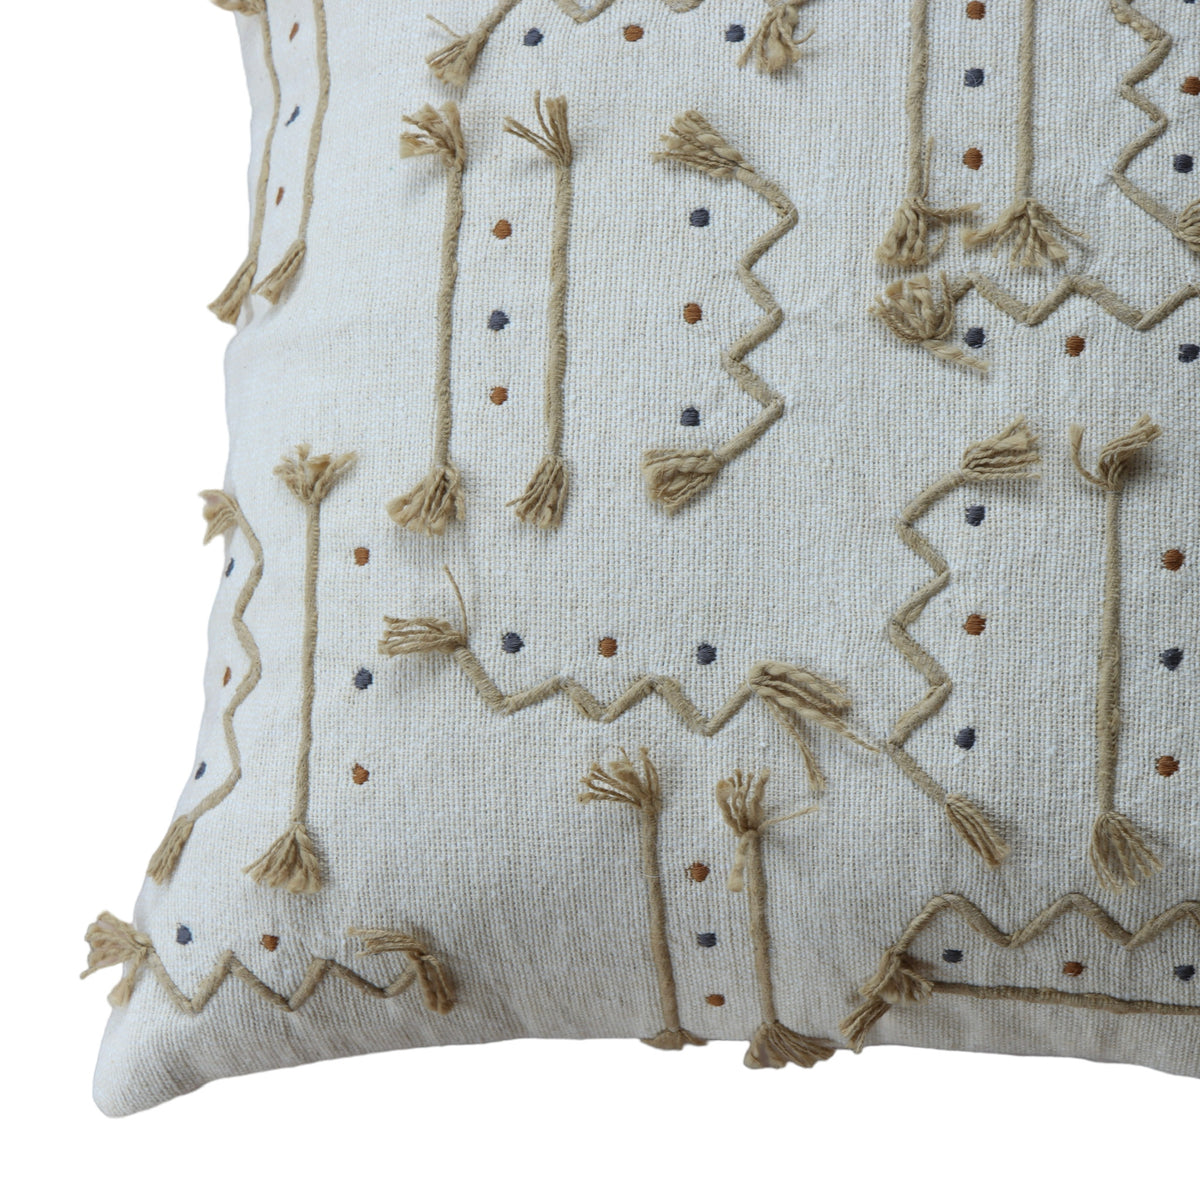 Preya Tan Tassel Embroidered Pillow Cover - 18 Inch - Holistic Habitat 